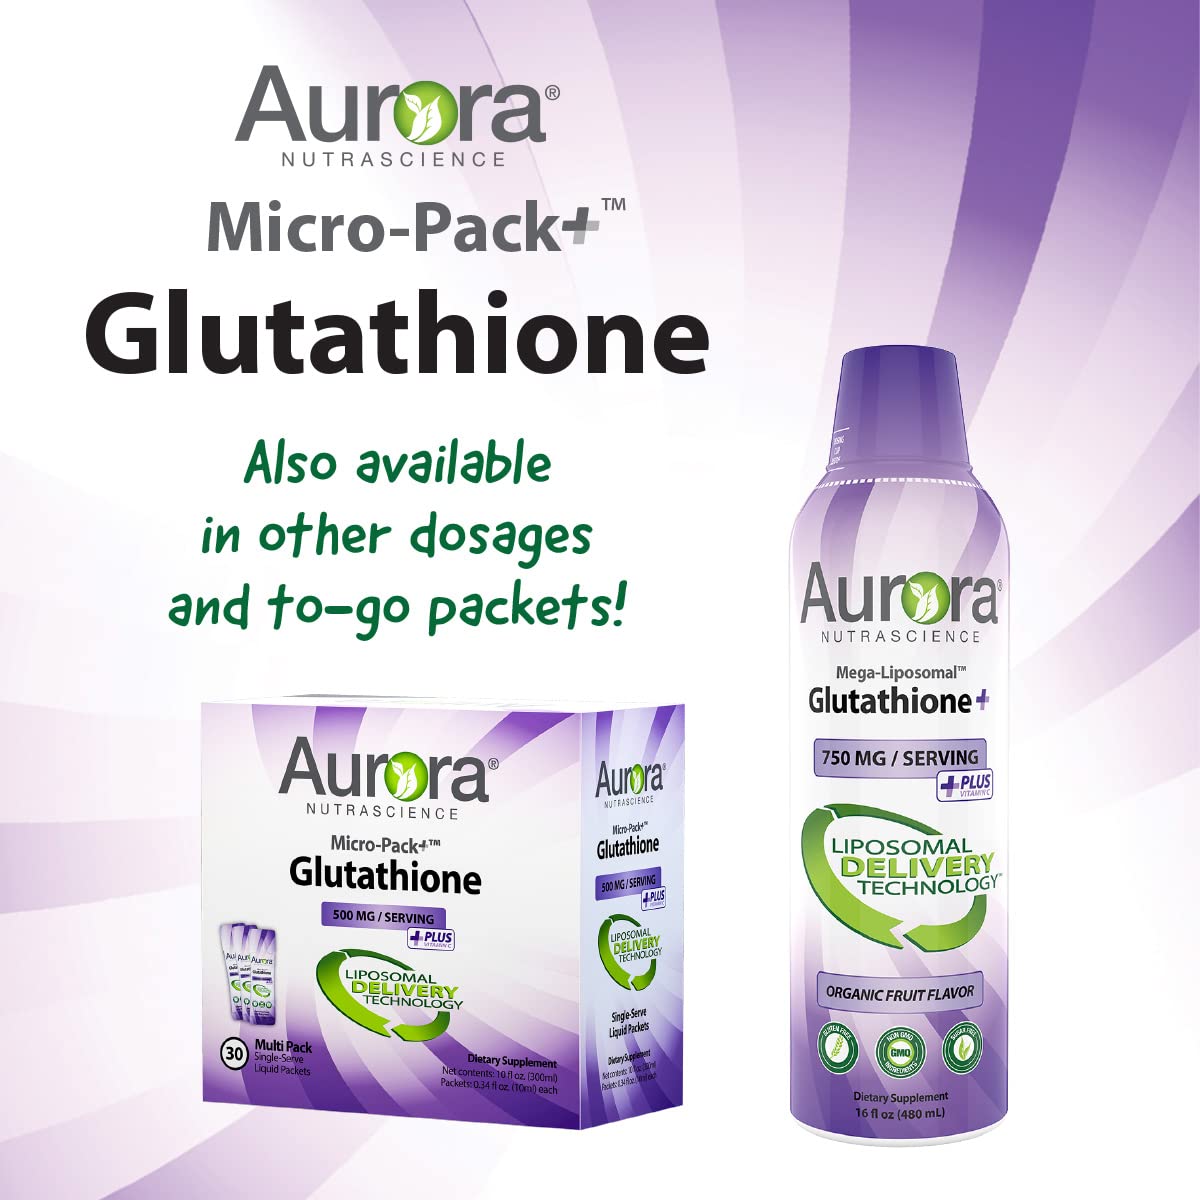 Aurora Nutrascience, Mega-Liposomal Glutathione+ Vitamin C, Immune System Support, Antioxidant, 750 mg per Serving, Gluten Free, Non-GMO, Sugar-Free, Organic Fruit Flavor, 16 fl oz (480 mL)